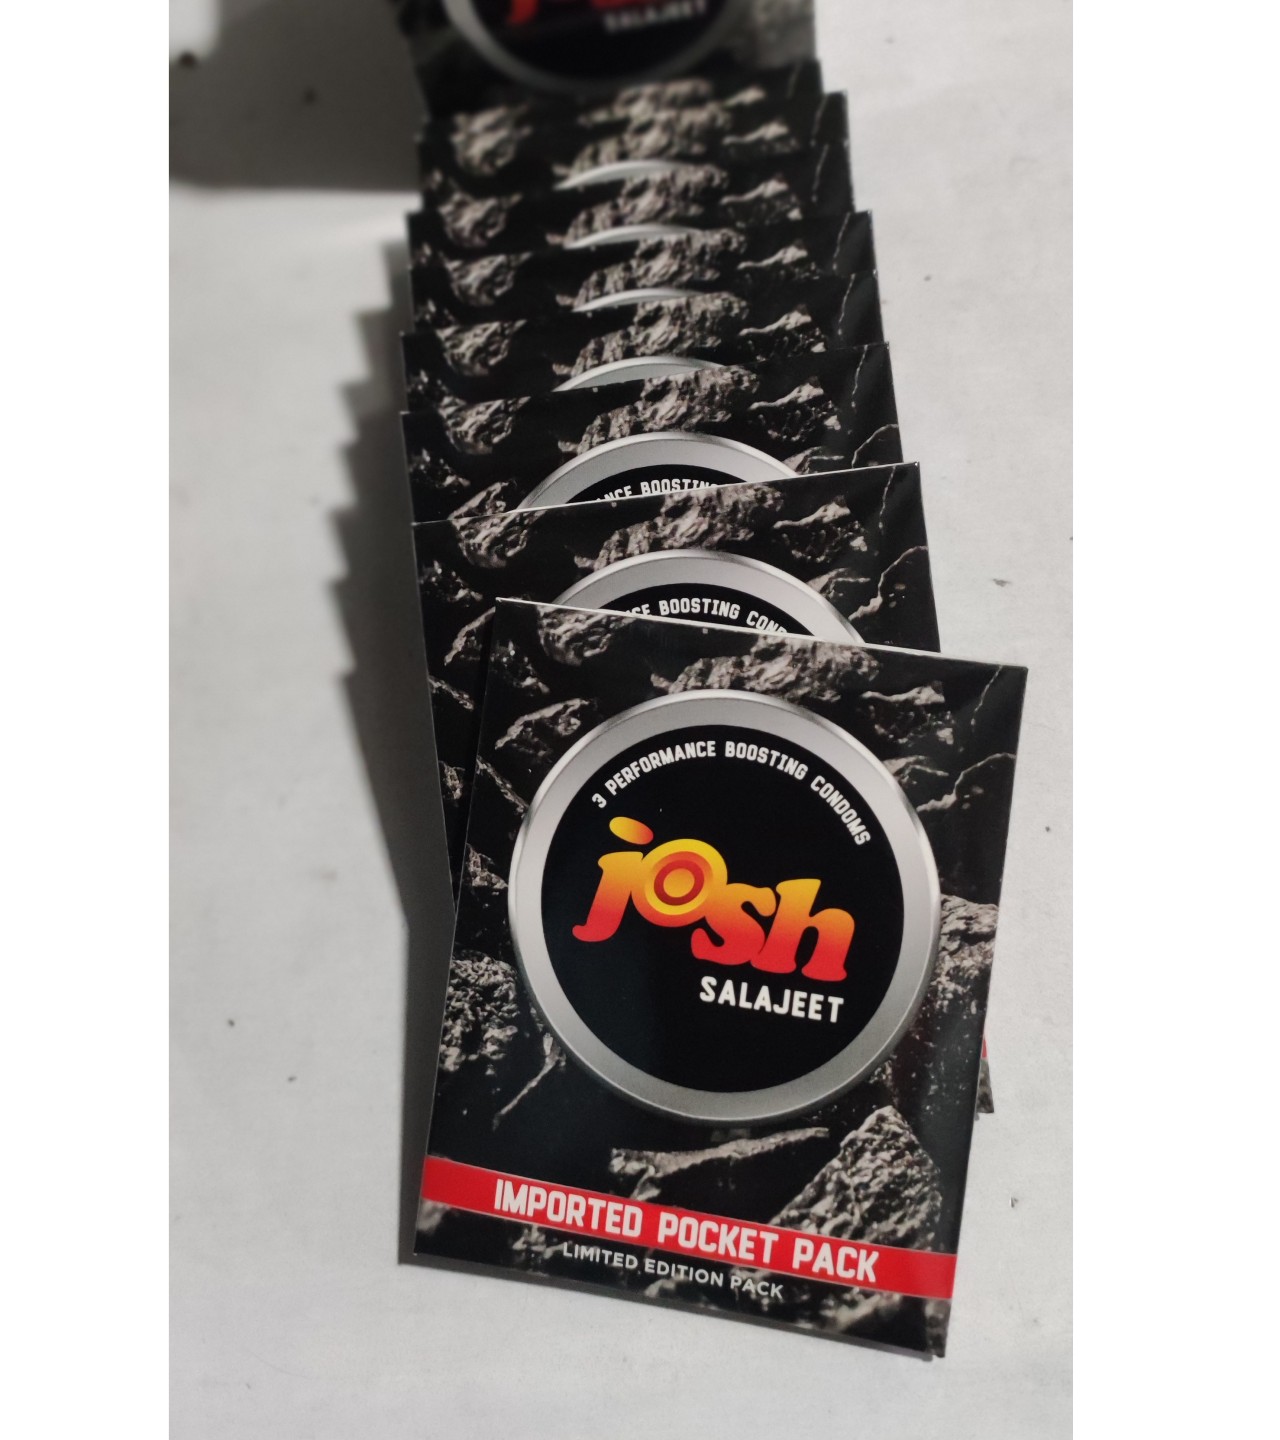 Josh SALAJEET 3 performance boosting condoms